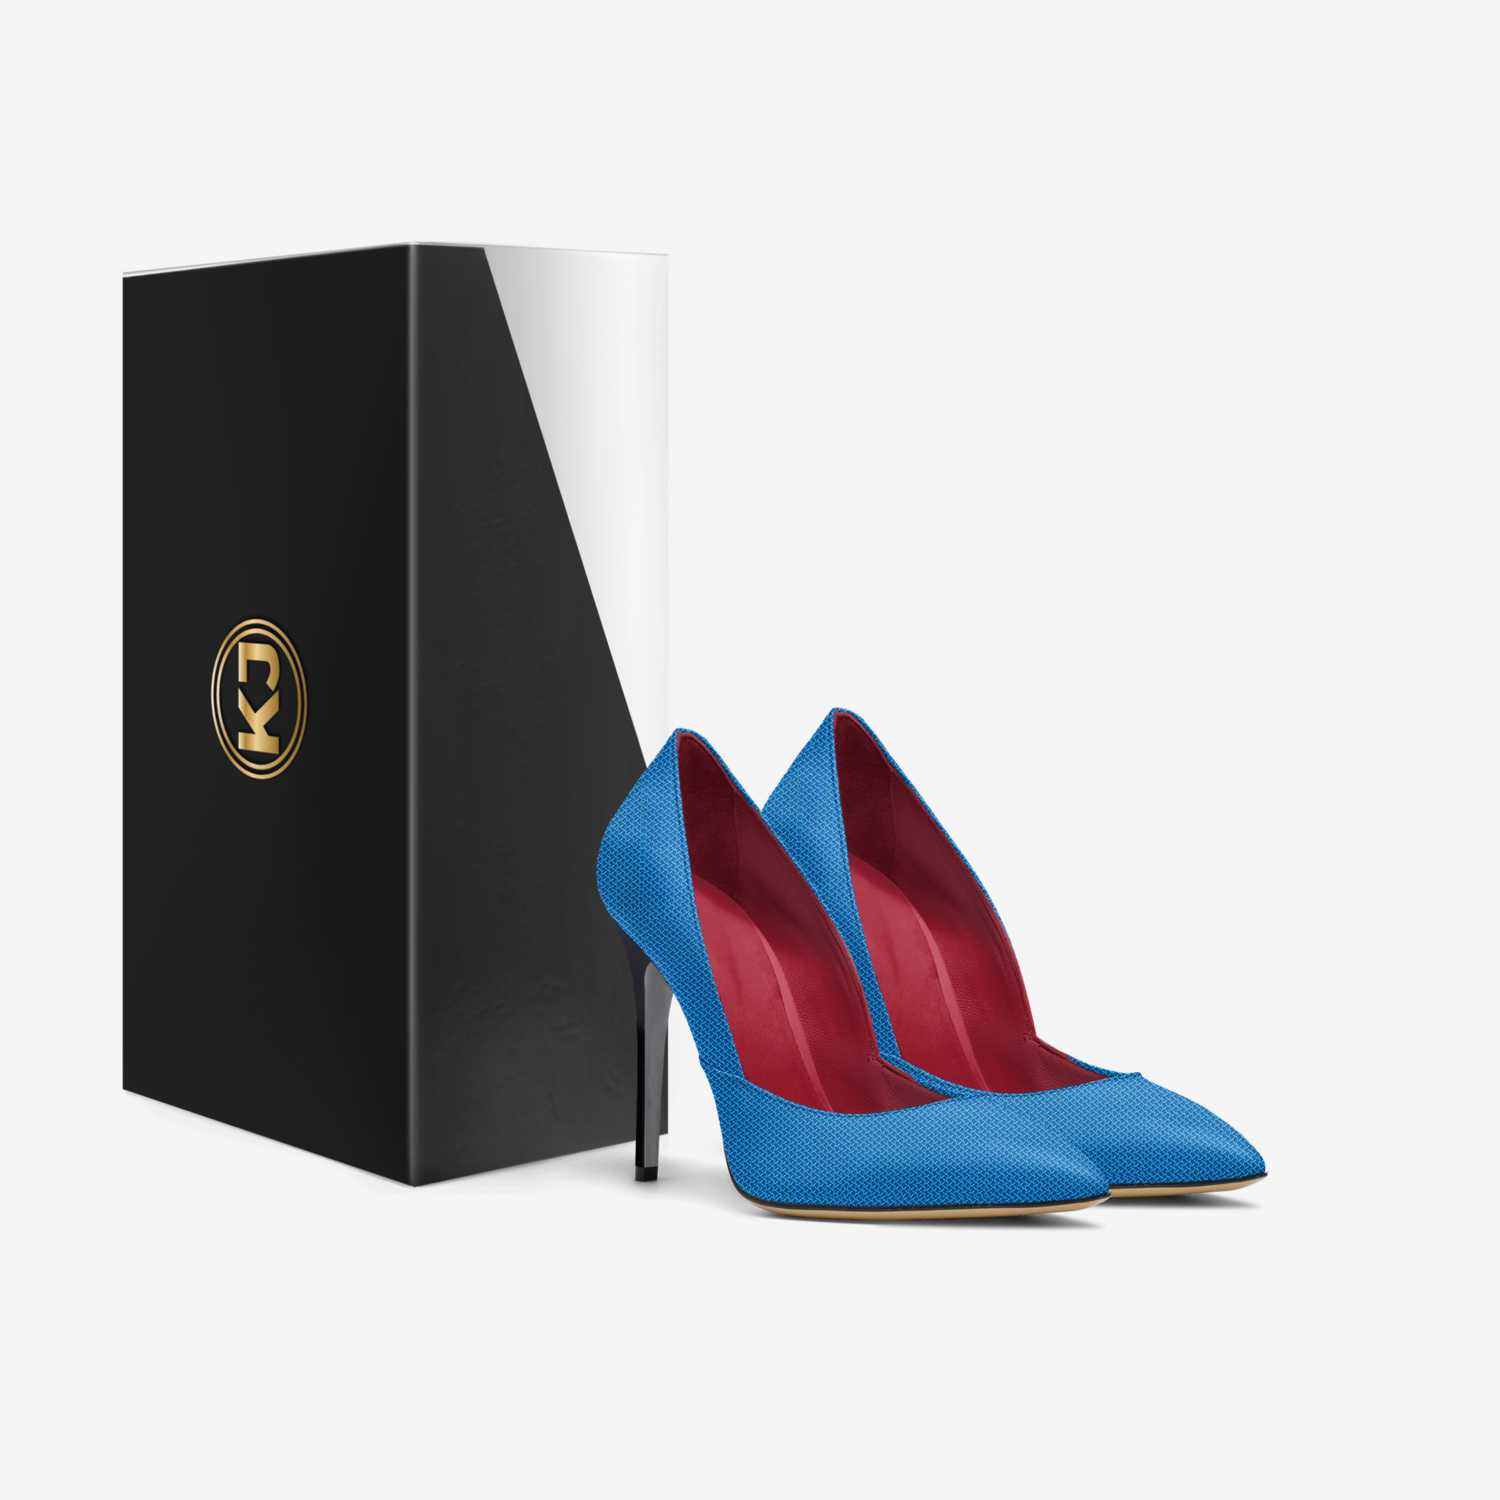 III custom made in Italy shoes by Kelton Jones | Box view